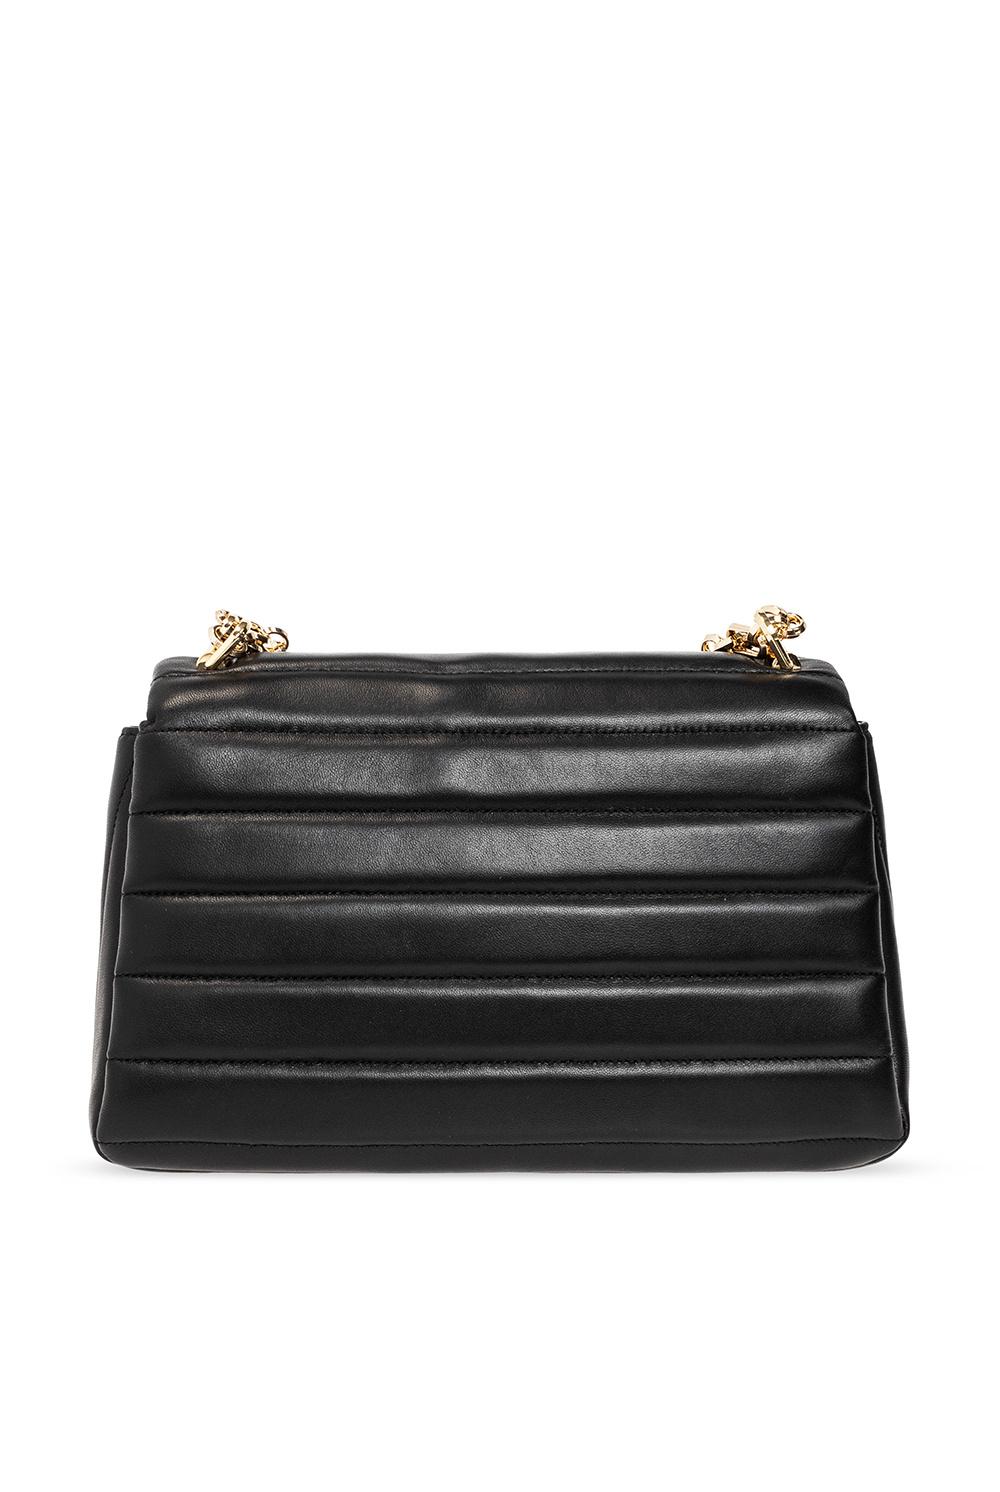 Kate Spade New York Women's Carlyle Medium Shoulder Handbag - Black 